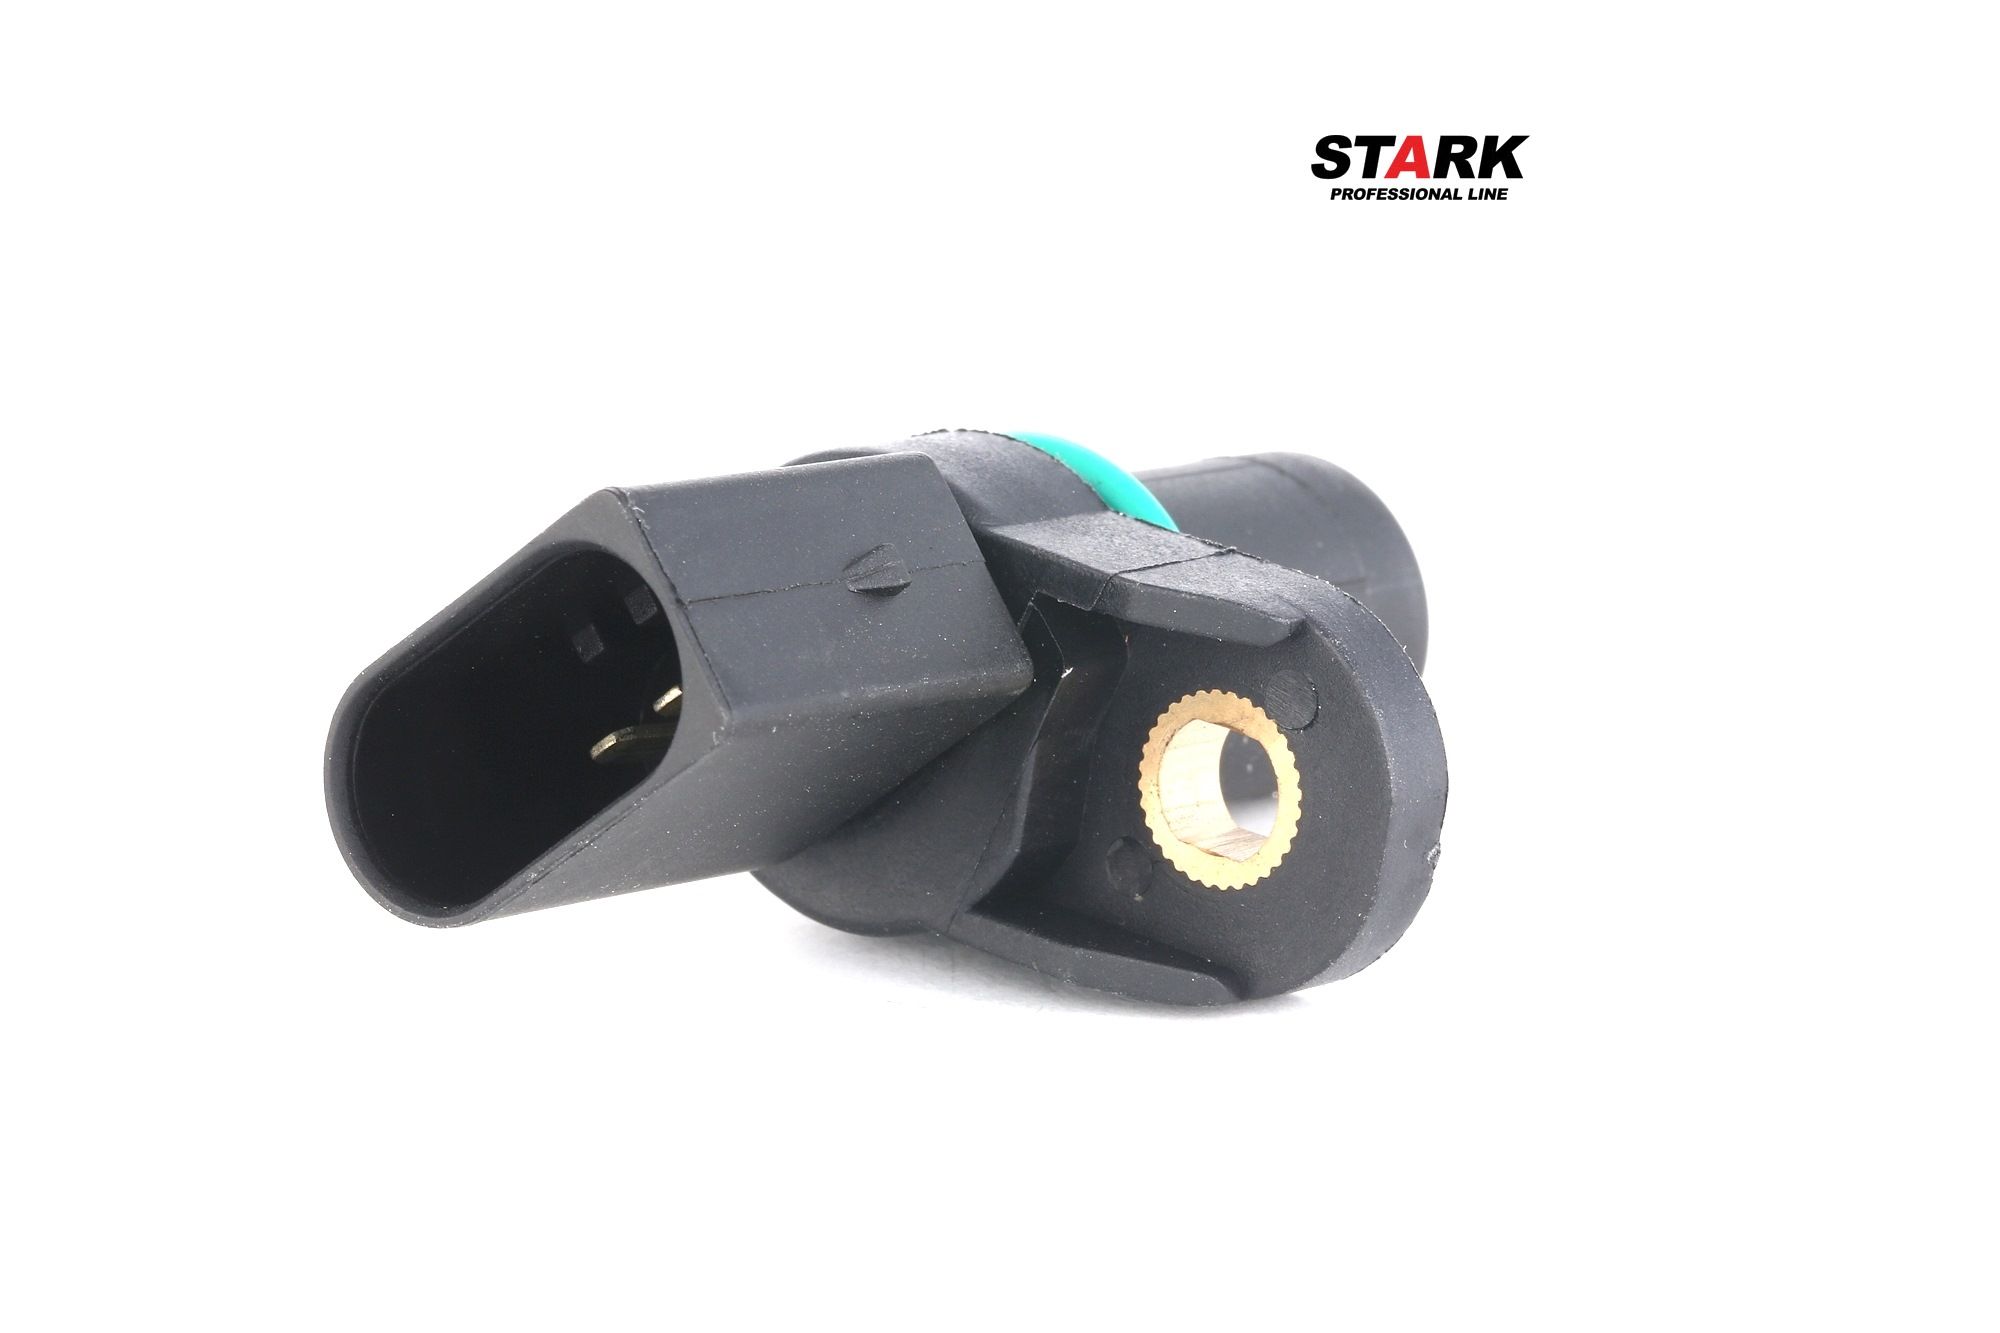 STARK SKCPS-0360038 Crankshaft sensor Hall Sensor, without cable, with seal ring